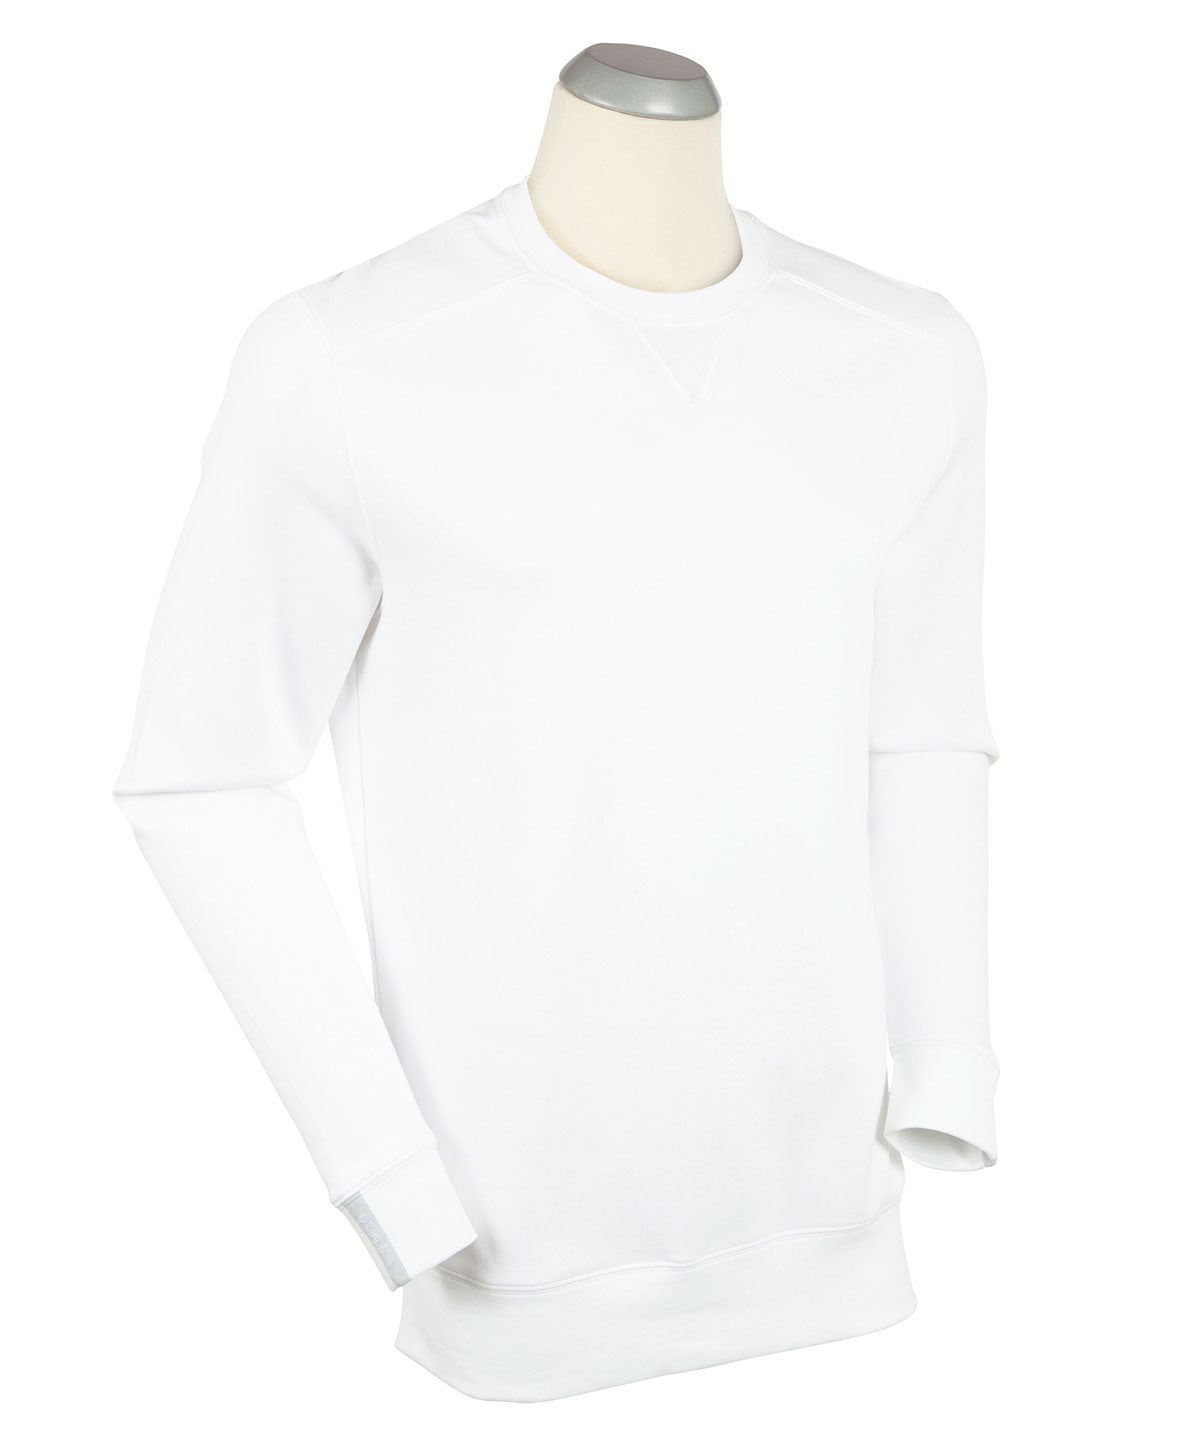 EPDubz Crooklyn Dodgers Crewneck Sweater, Unisex / Small / White